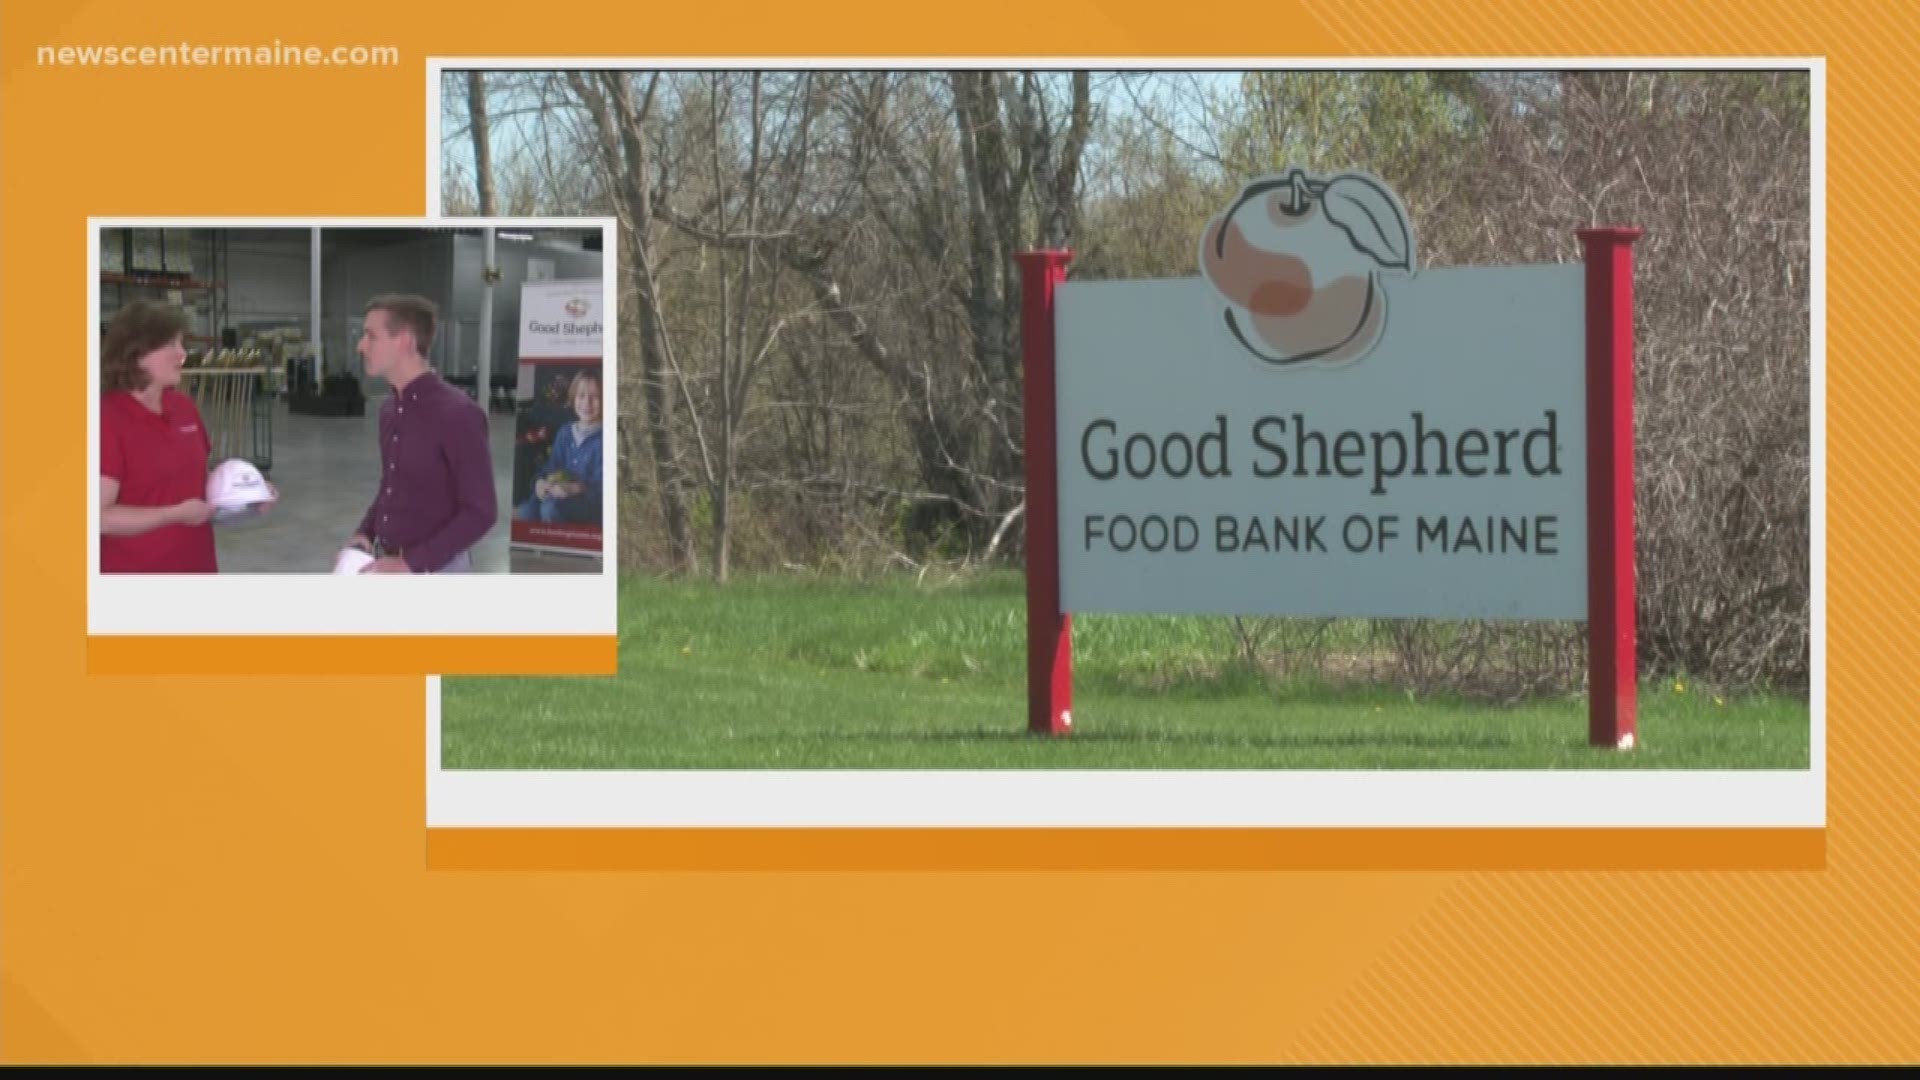 Zach Blanchard reports on the Good Shepherd Food Bank